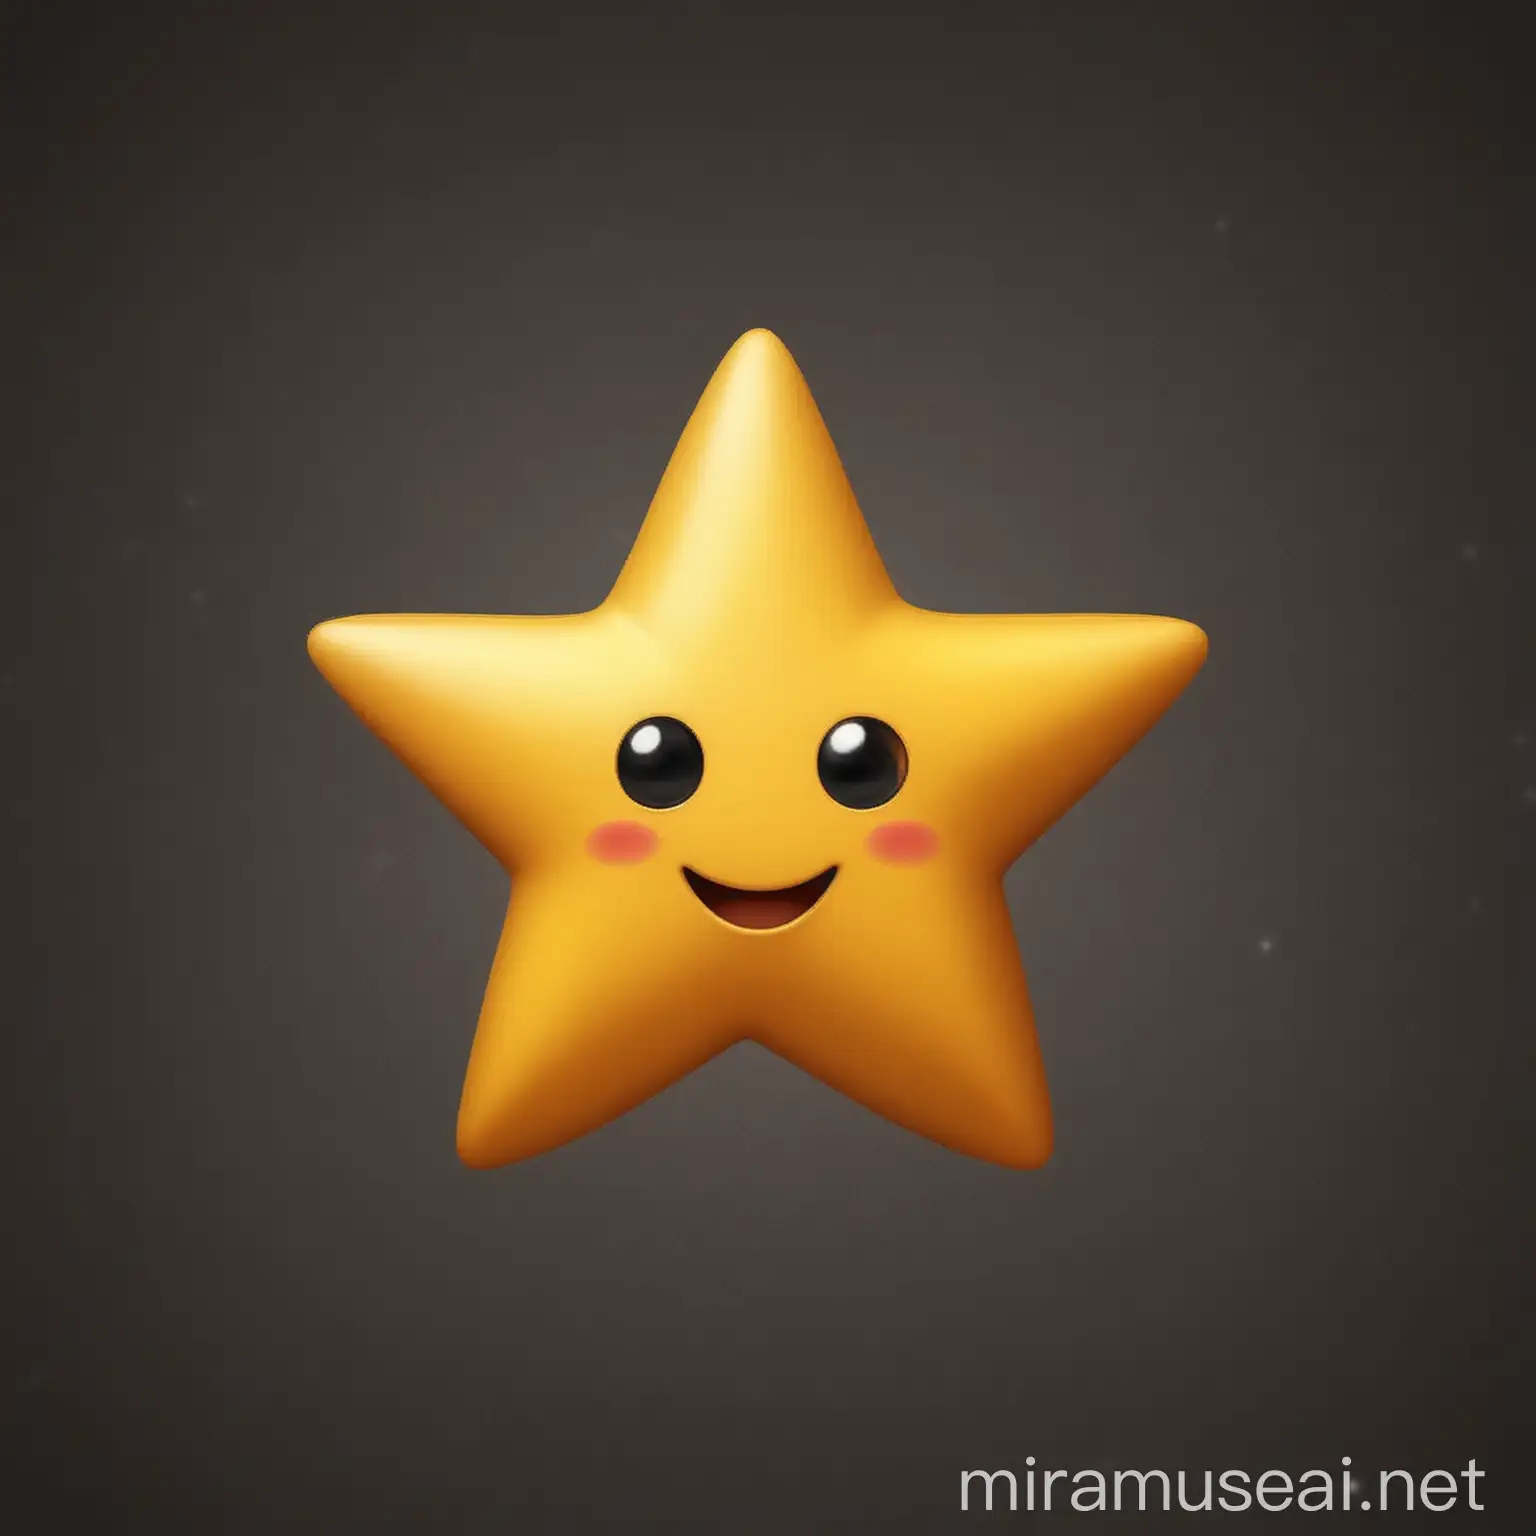 Bright Star Emoji Shining in Celestial Darkness